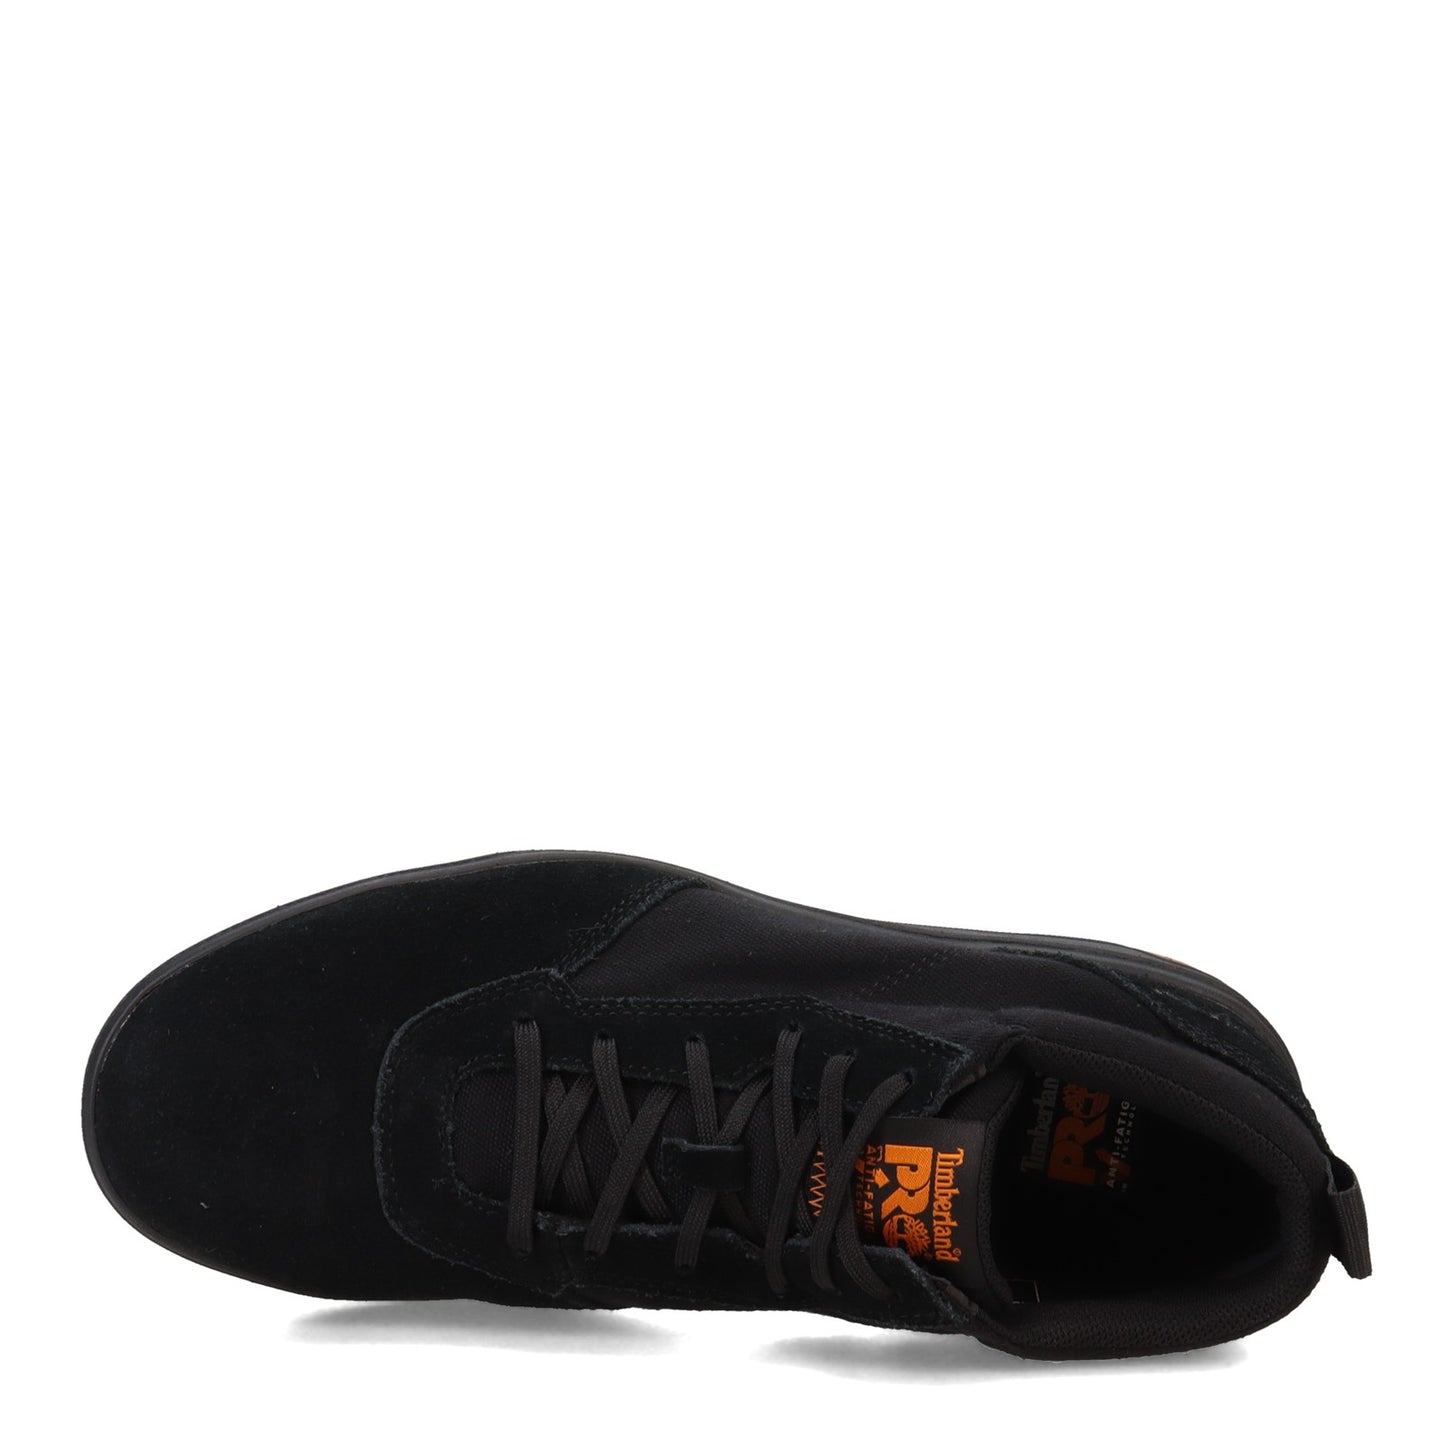 Peltz Shoes  Men's Timberland Pro Berkley Chukka Comp Toe Work Boot Black TB0A5NWJ001